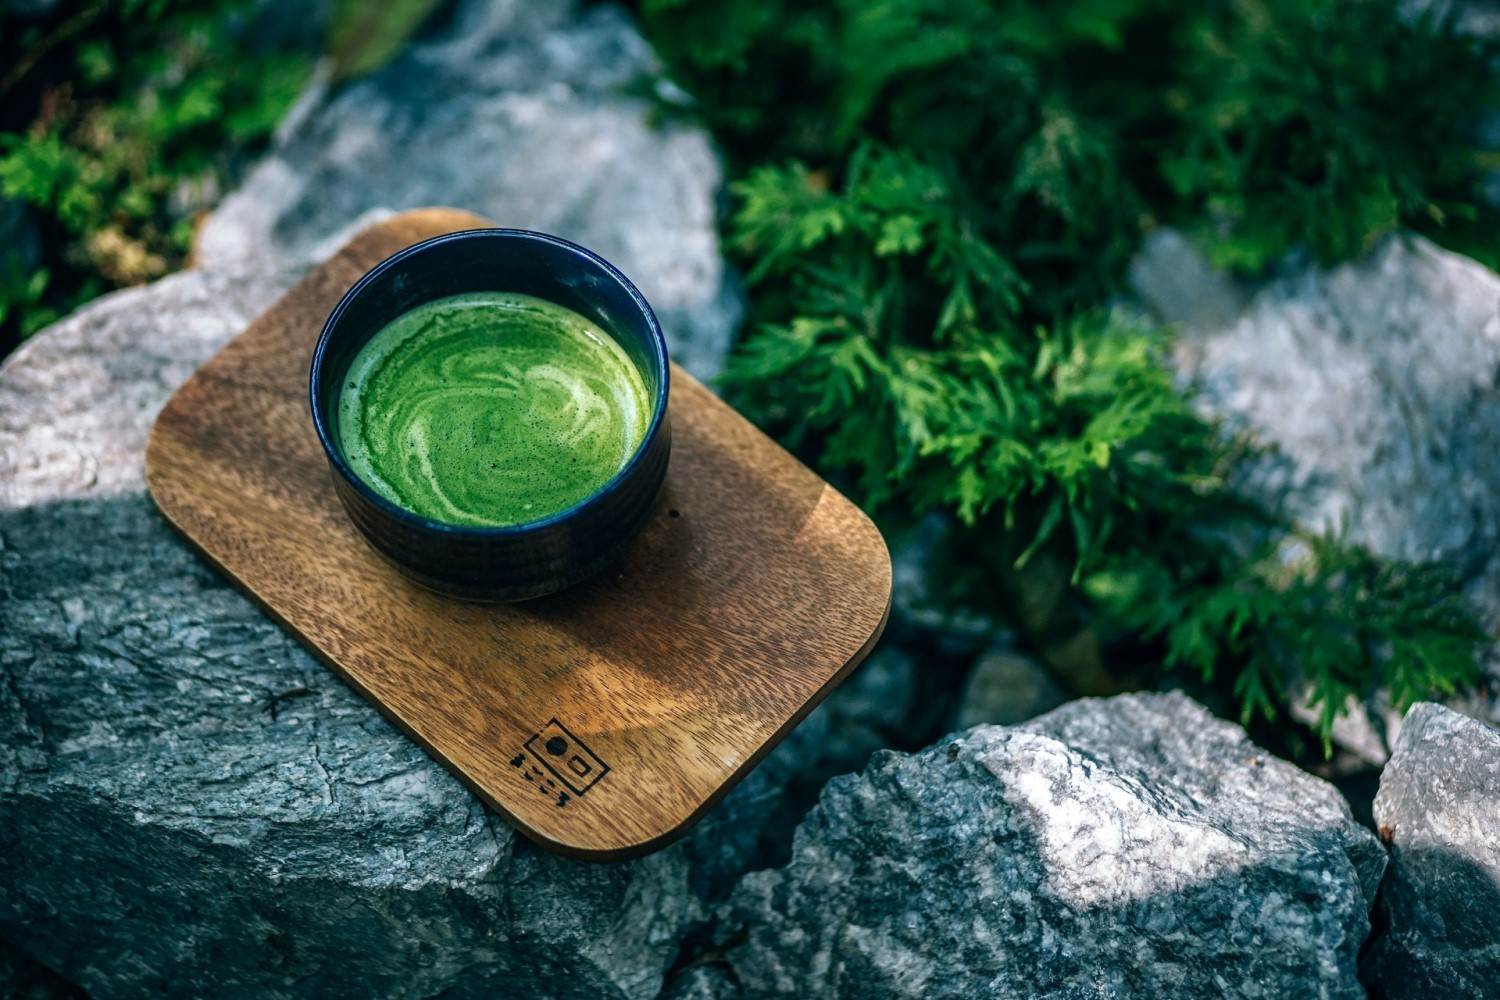 buy organic green tea online, single origin green tea, when is the best time to drink green tea